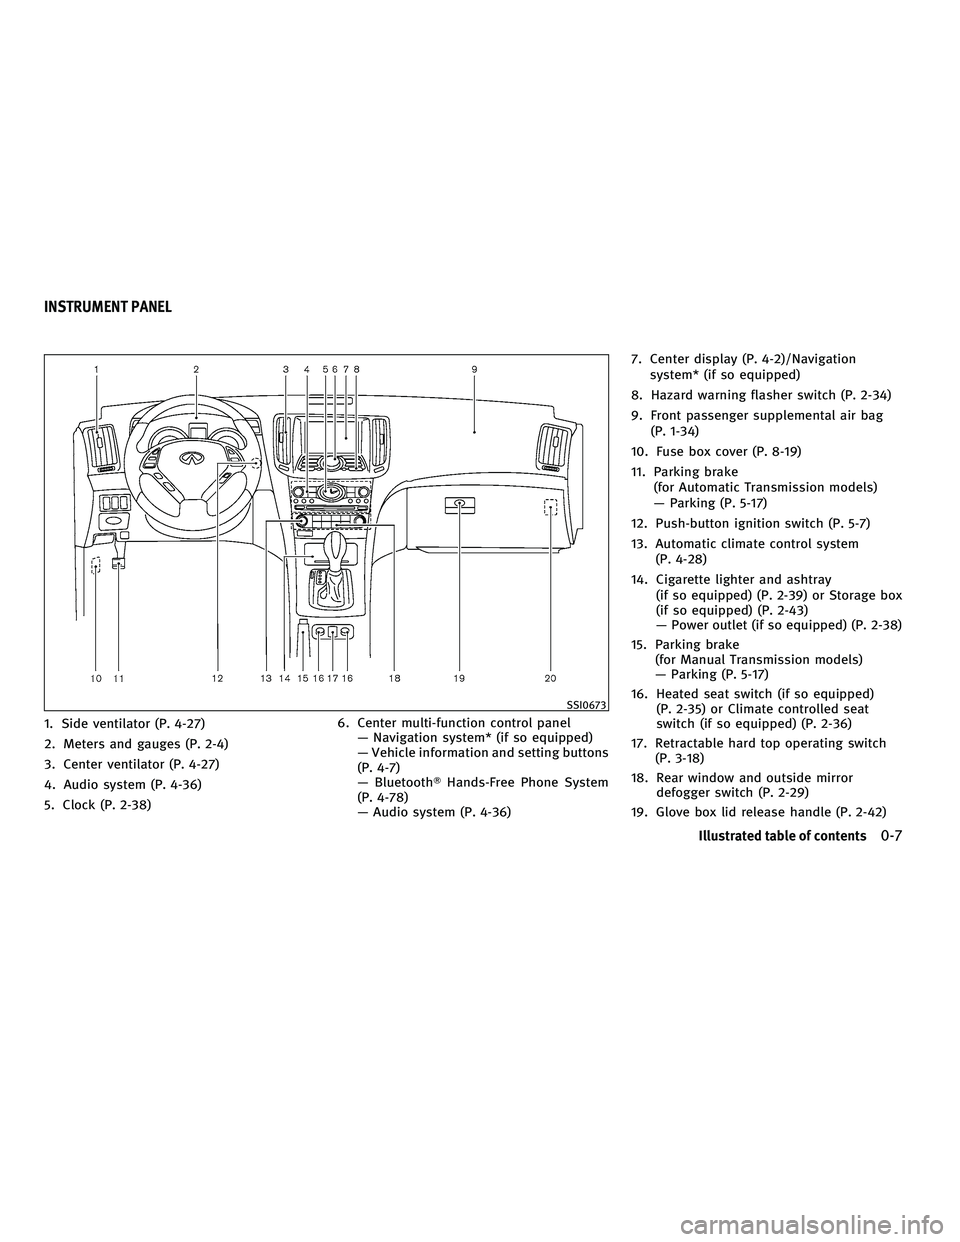 INFINITI G-CONVERTIBLE 2010 User Guide 1. Side ventilator (P. 4-27)
2. Meters and gauges (P. 2-4)
3. Center ventilator (P. 4-27)
4. Audio system (P. 4-36)
5. Clock (P. 2-38)6. Center multi-function control panel
— Navigation system* (if 